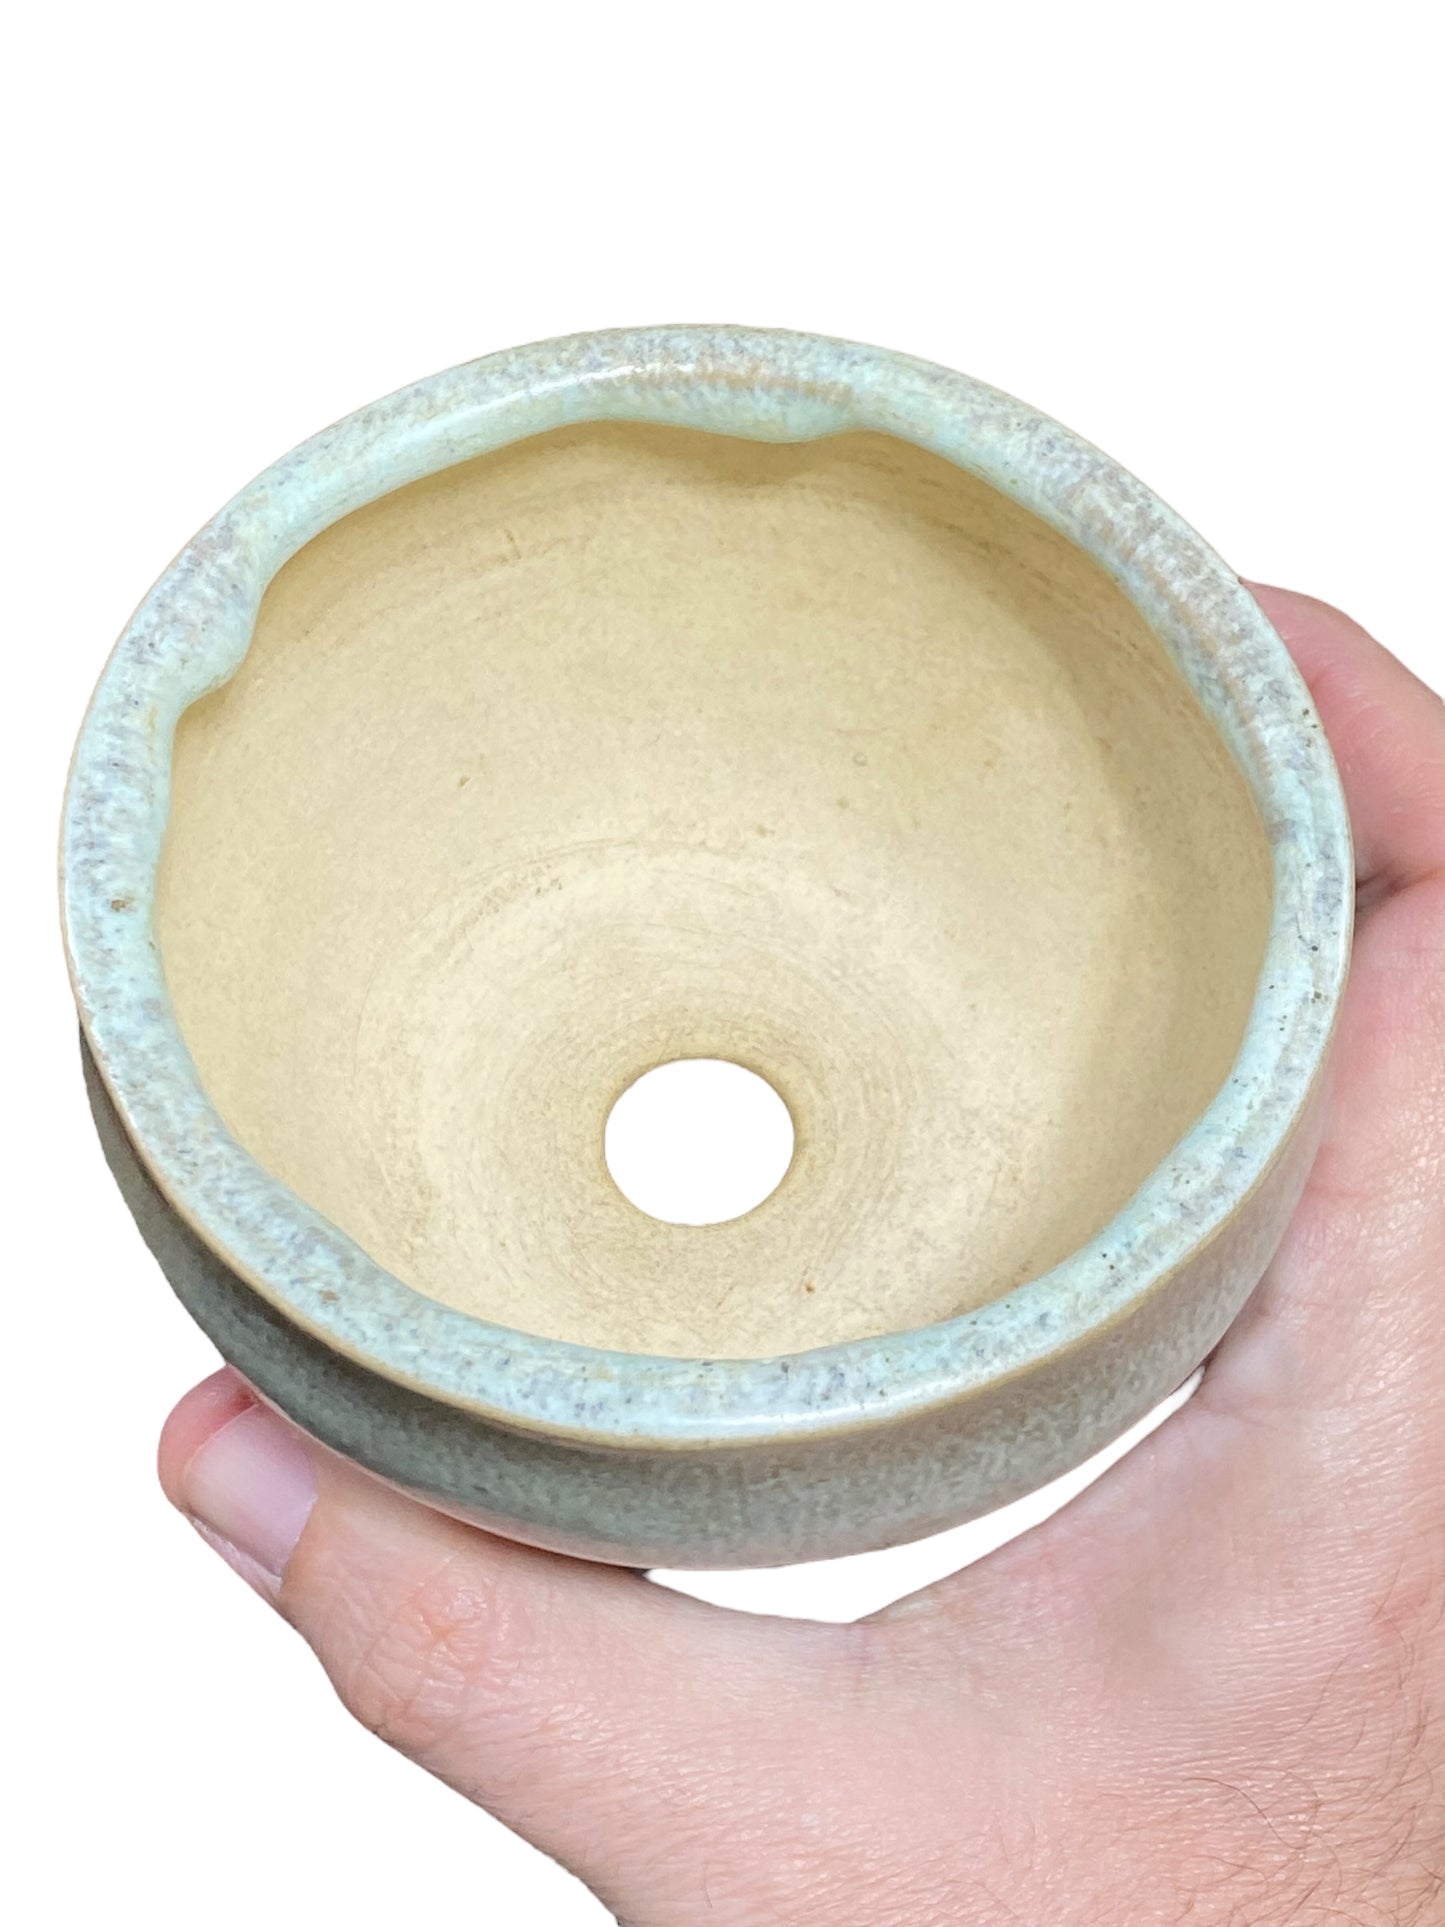 Yozan - Old Multicolor Glazed Bowl Bonsai Pot